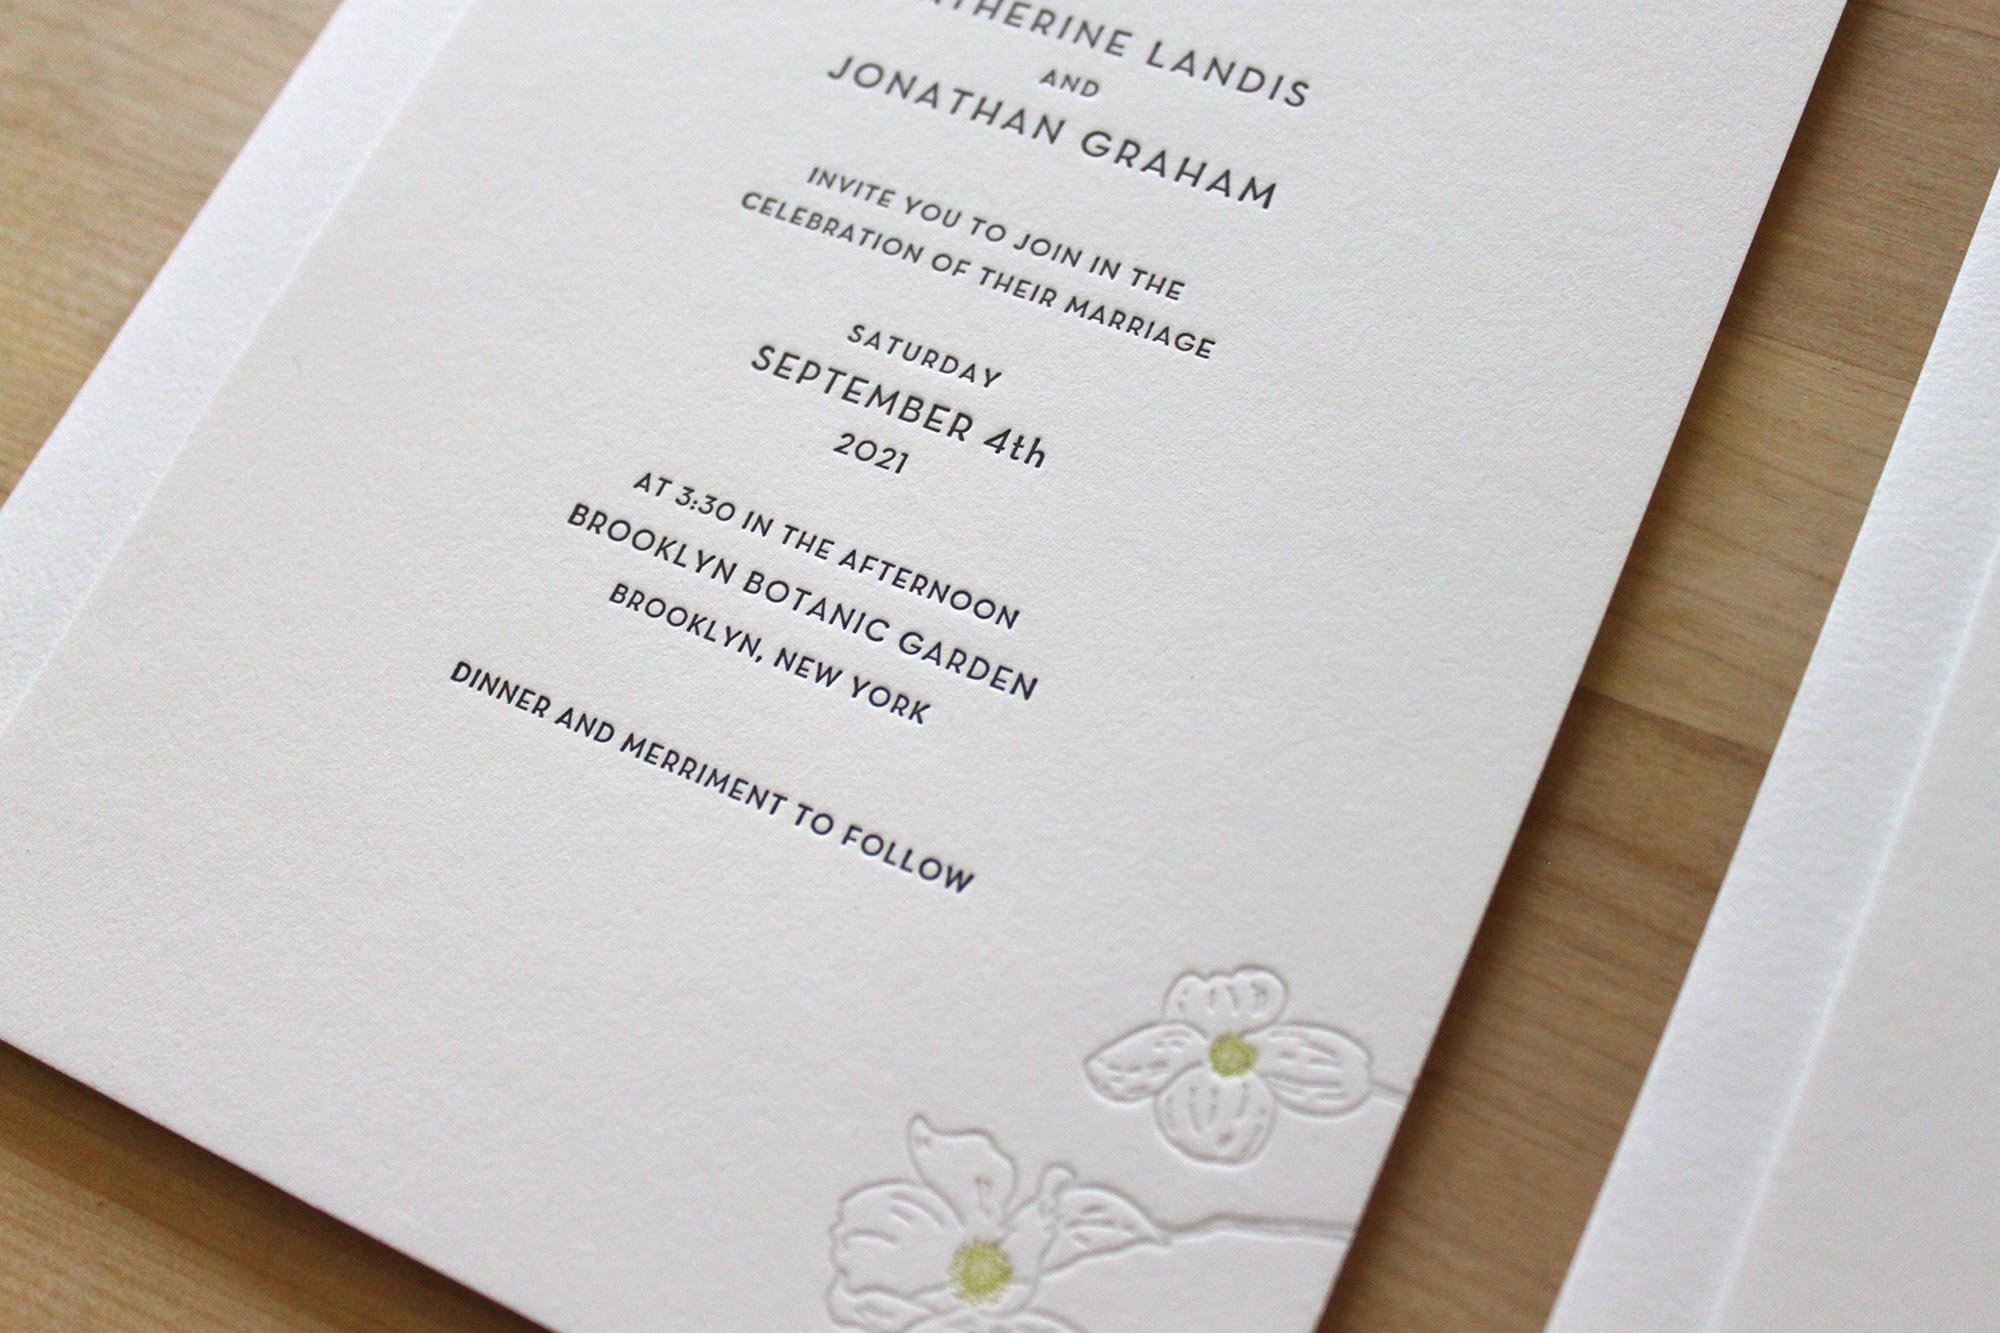 Dogwood-2-letterpress-wedding-invitation.jpg